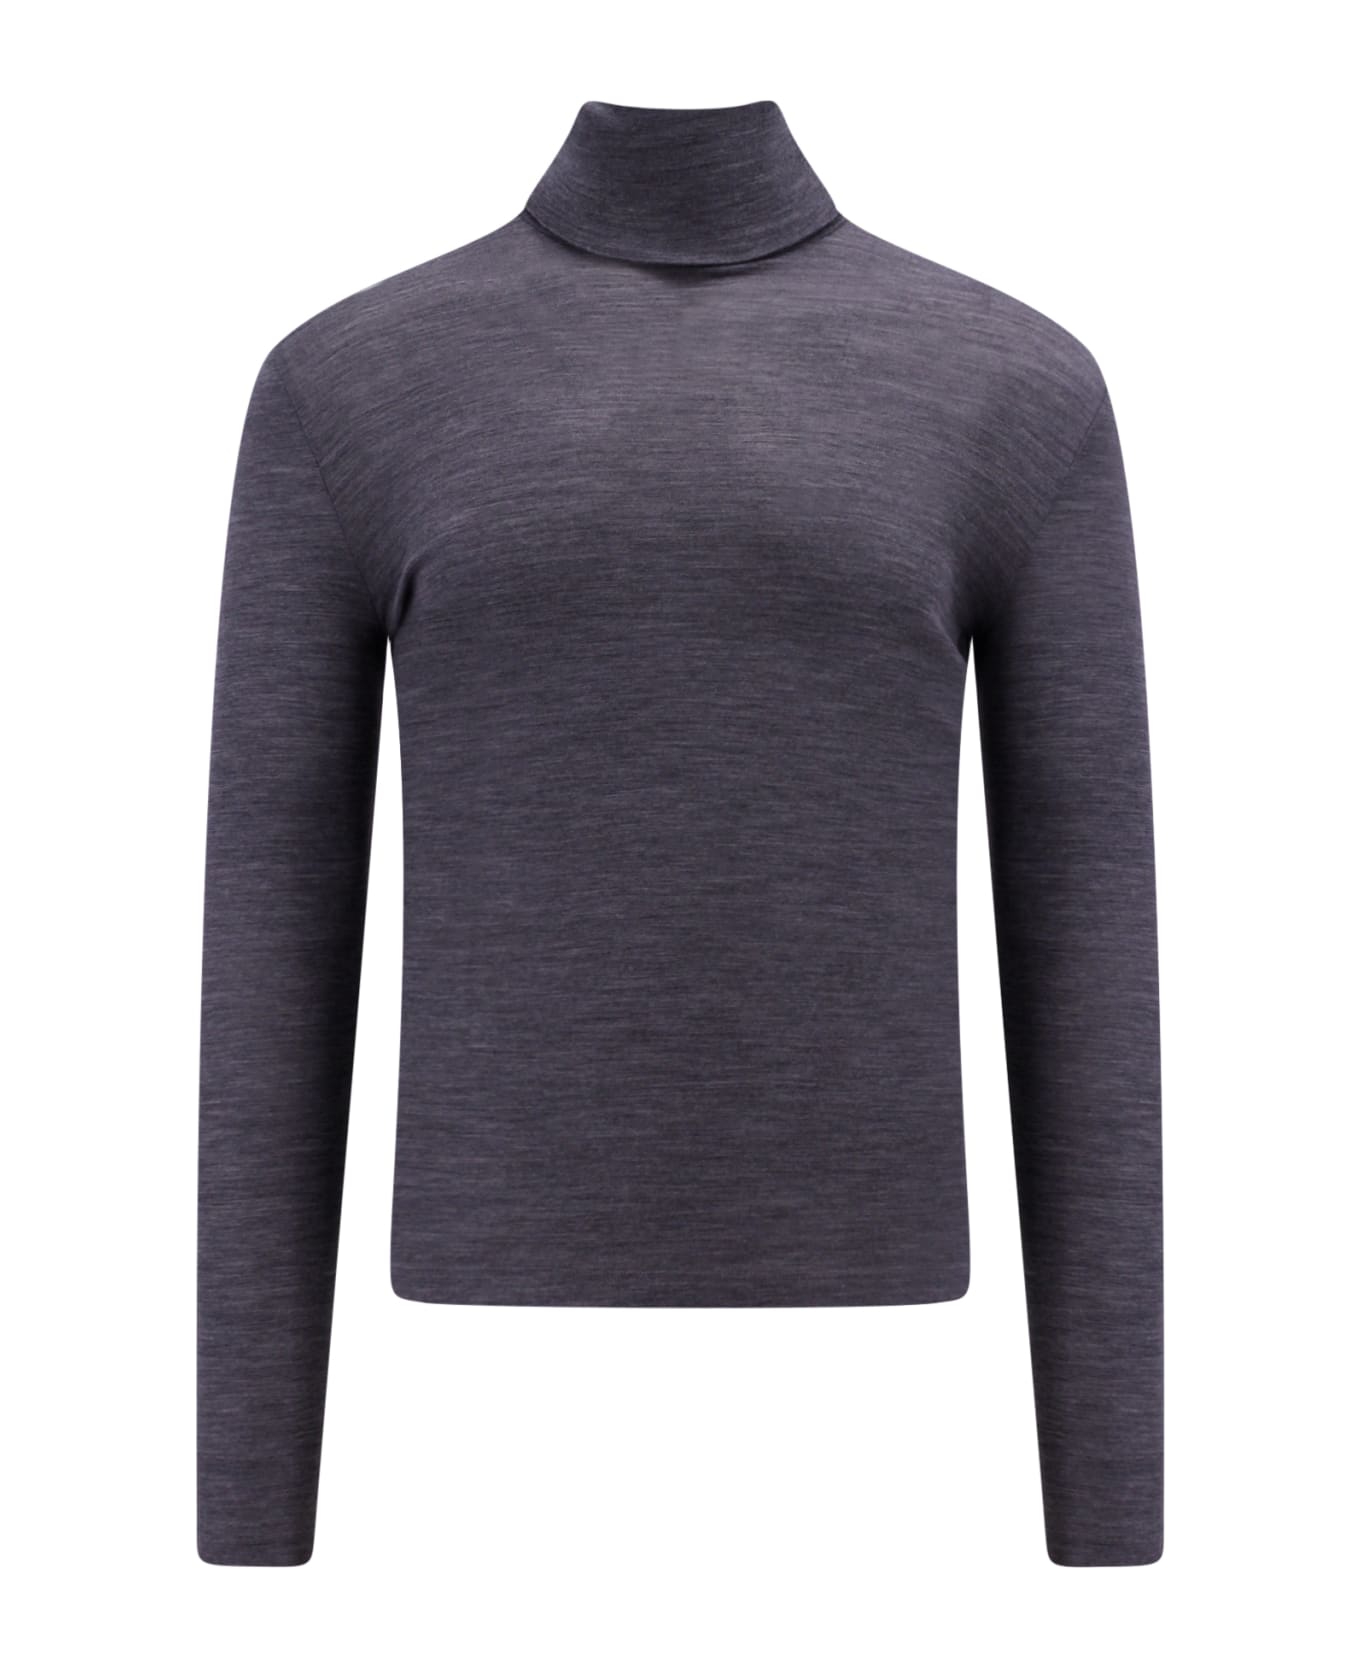 Saint Laurent Sweater - Grey